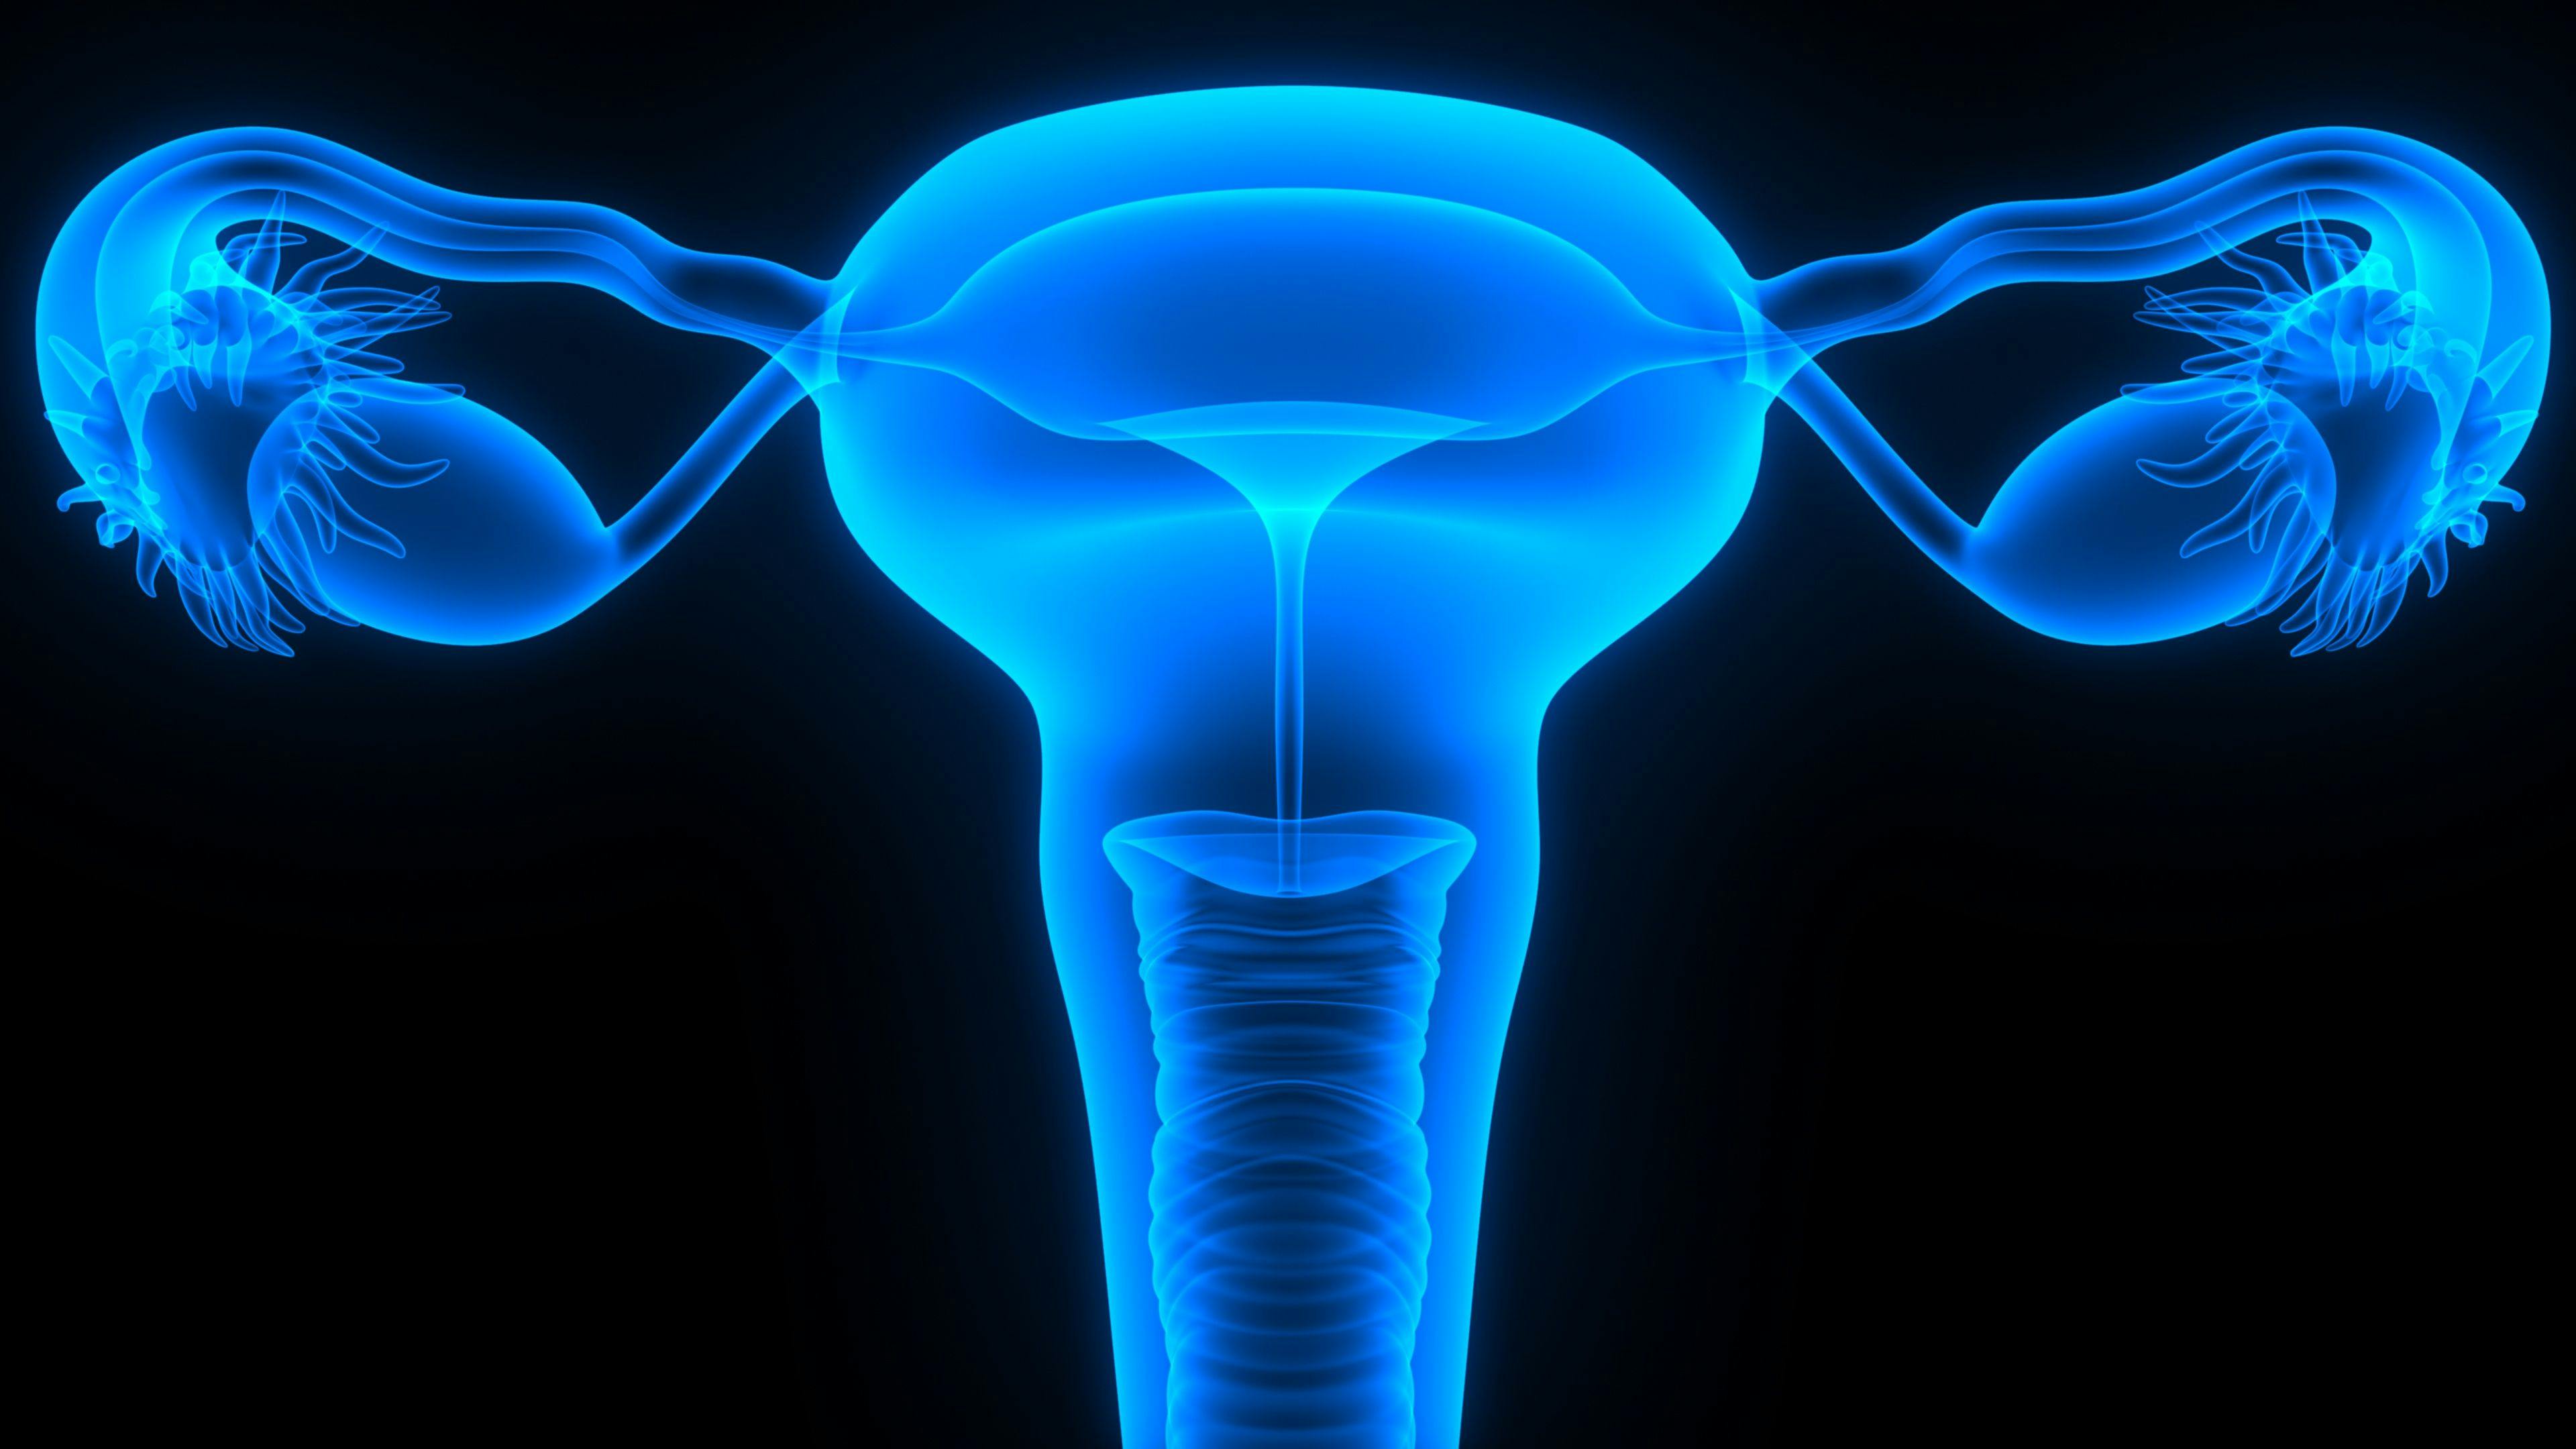 Frontline Maintenance Niraparib May Not Worsen HRQOL in Advanced Ovarian Cancer